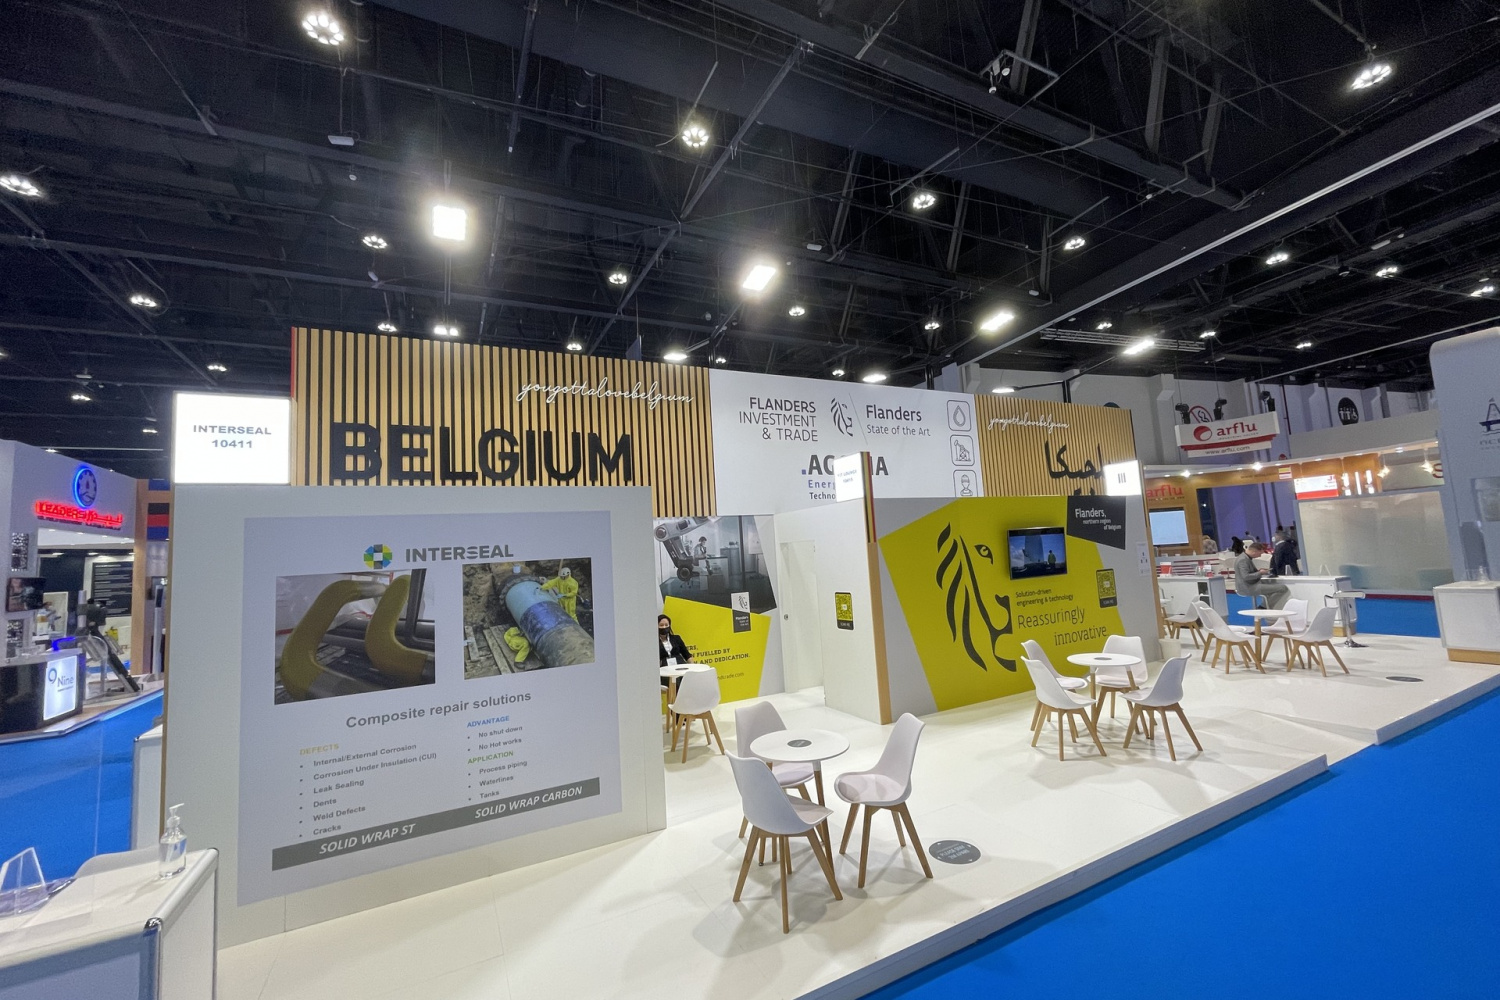 Belgium Pavilion stand on ADIPEC exhibition